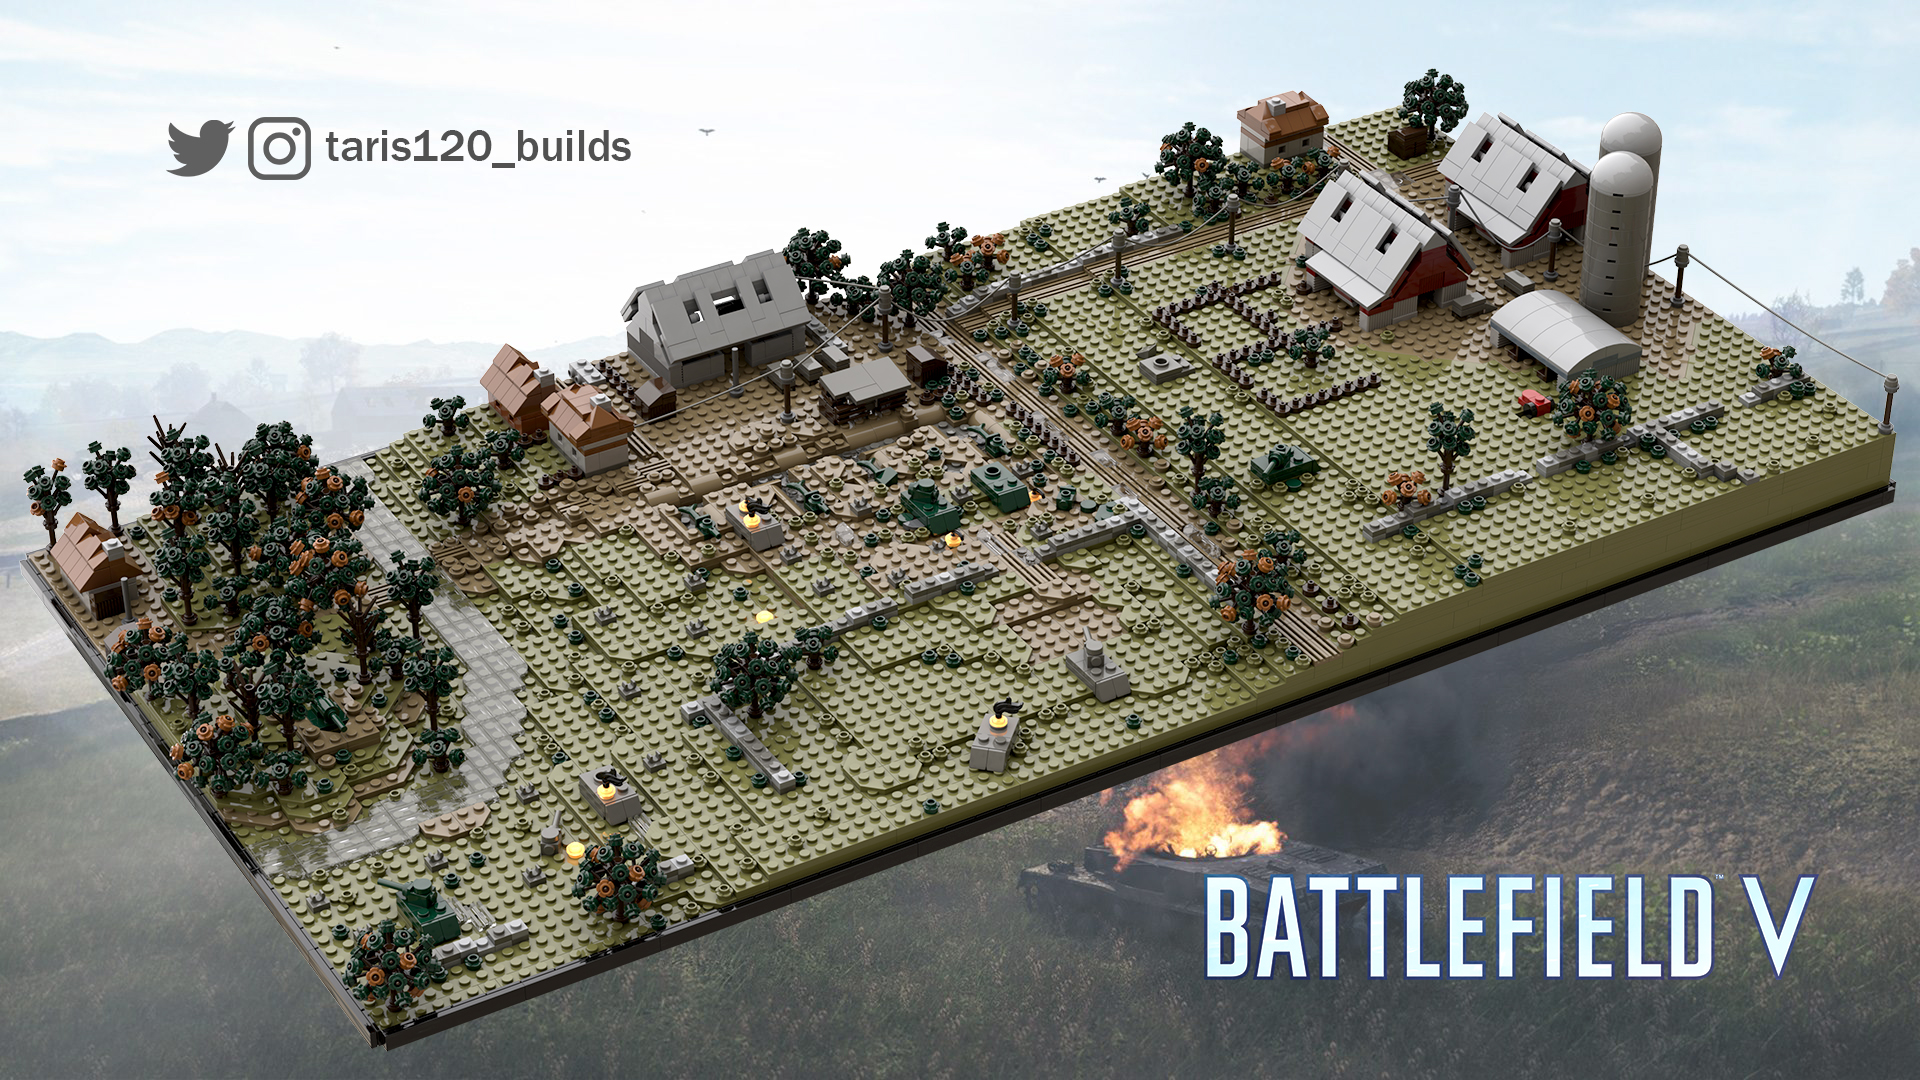 Taris120_Builds on Twitter: "Lego PANZERSTORM #LegoBattlefield /